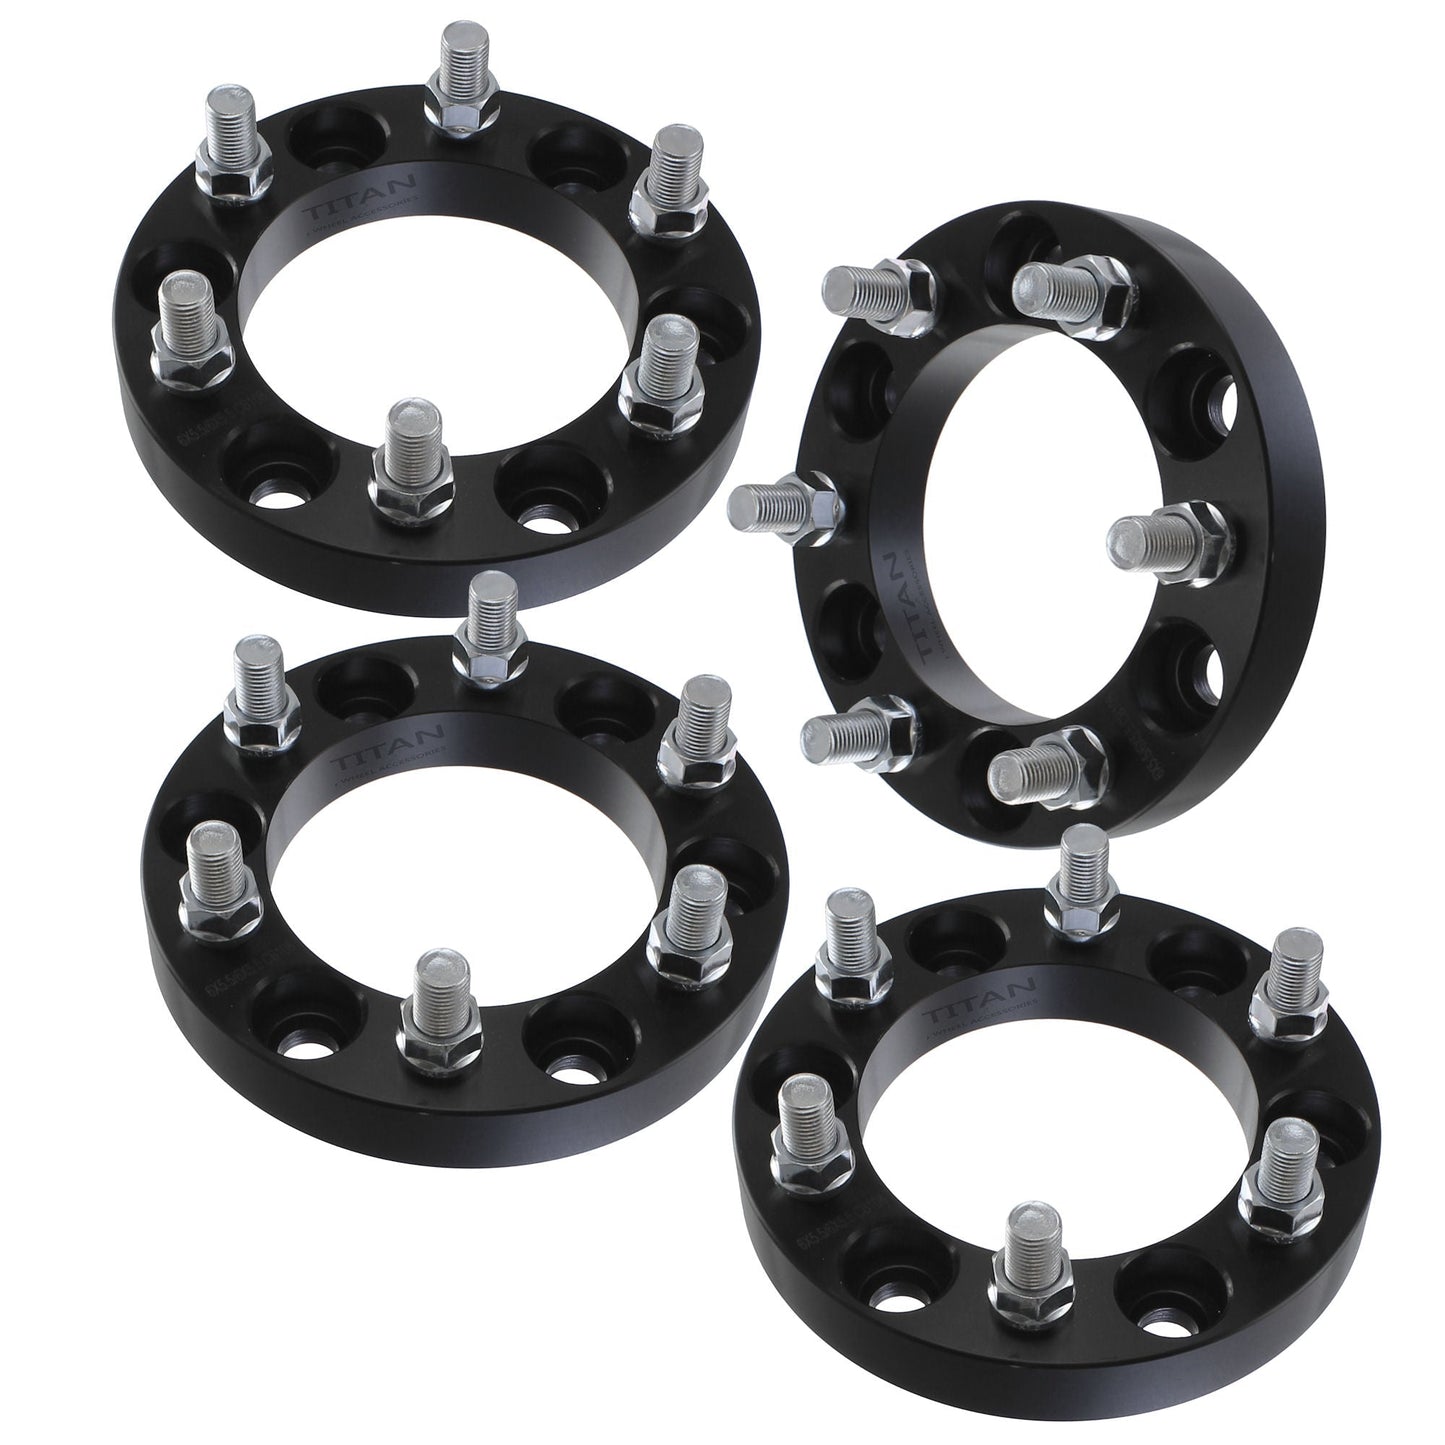 32mm (1.25") Titan Wheel Spacers for Escalade Sierra Yukon Suburban Silverado | 6x5.5 (6x139.7) | 14x1.5 Studs | Set of 4 | Titan Wheel Accessories